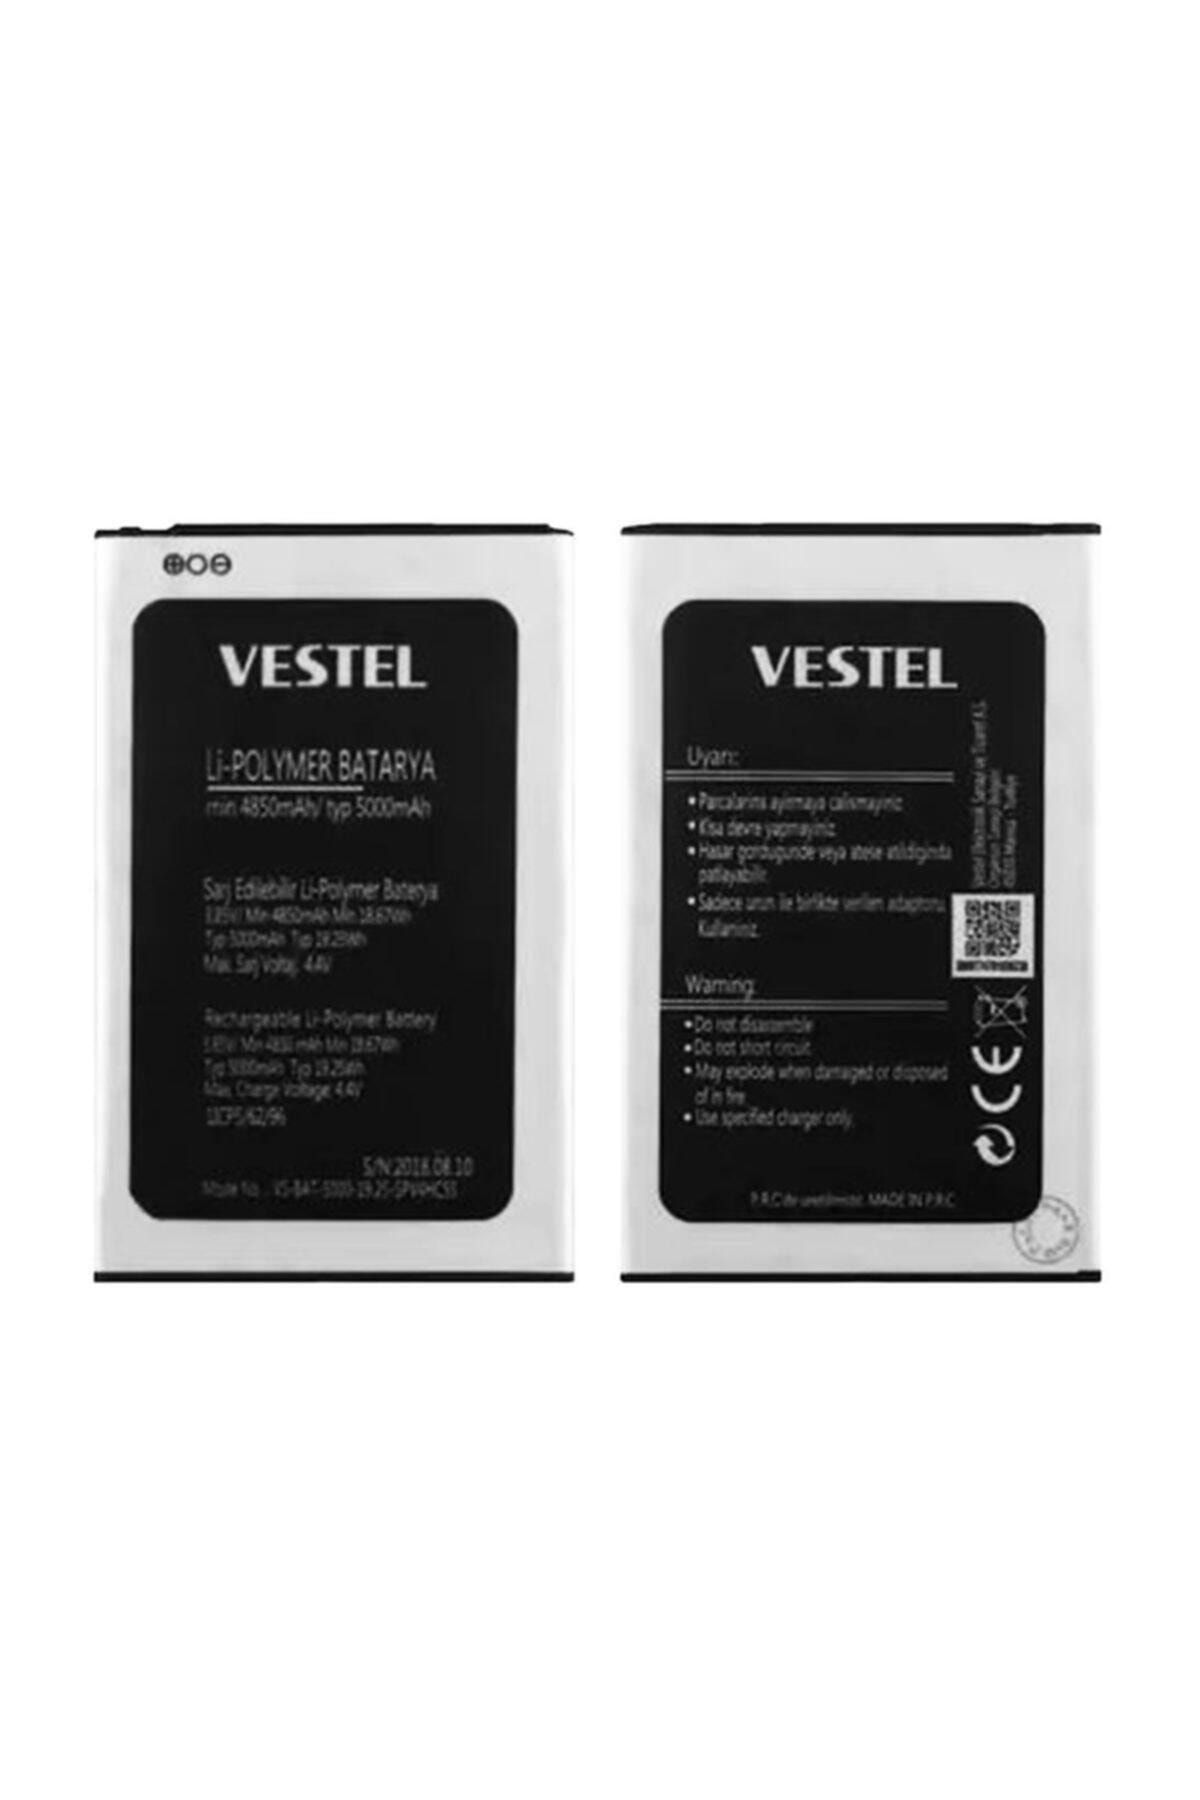 VESTEL V4 Batarya Pil A++ Lityum Polimer Pil